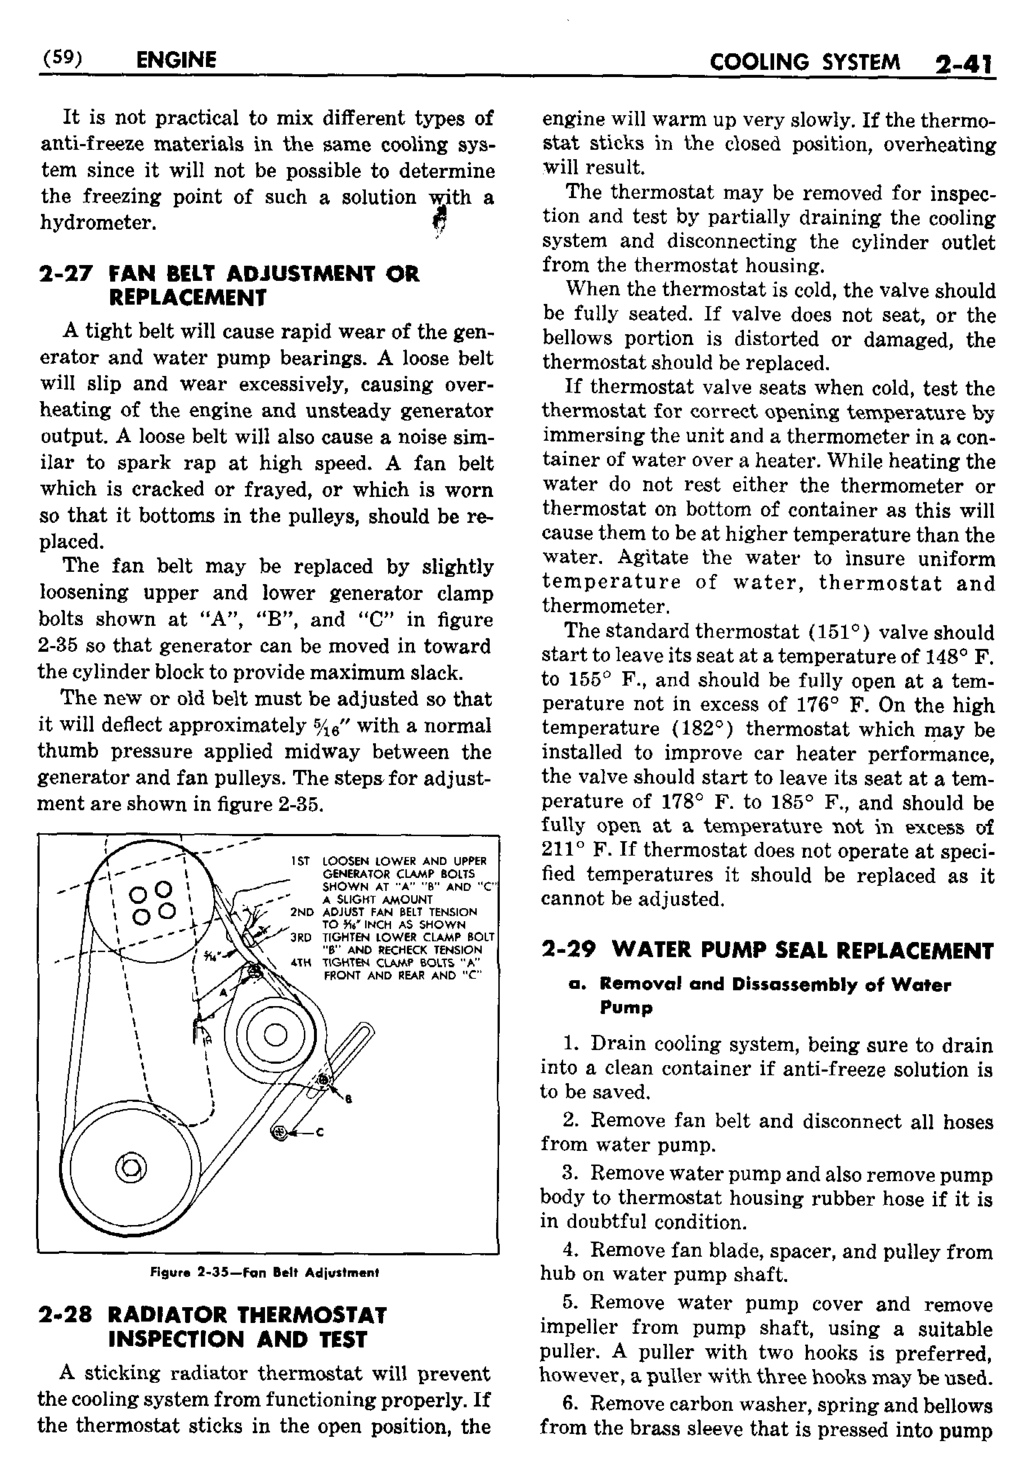 n_03 1950 Buick Shop Manual - Engine-041-041.jpg